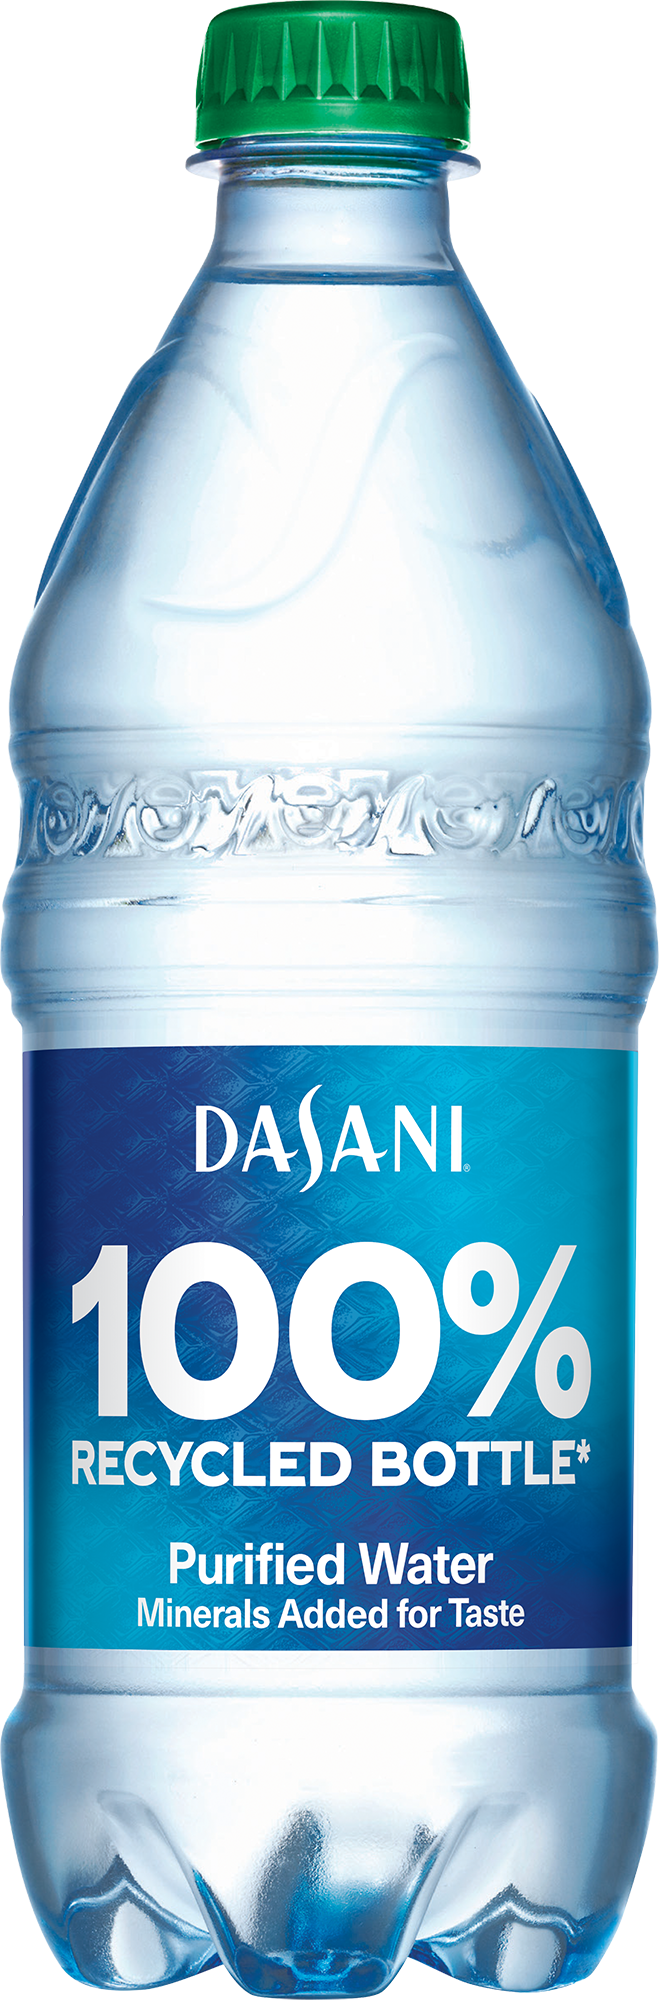 20 oz Dasani water bottle